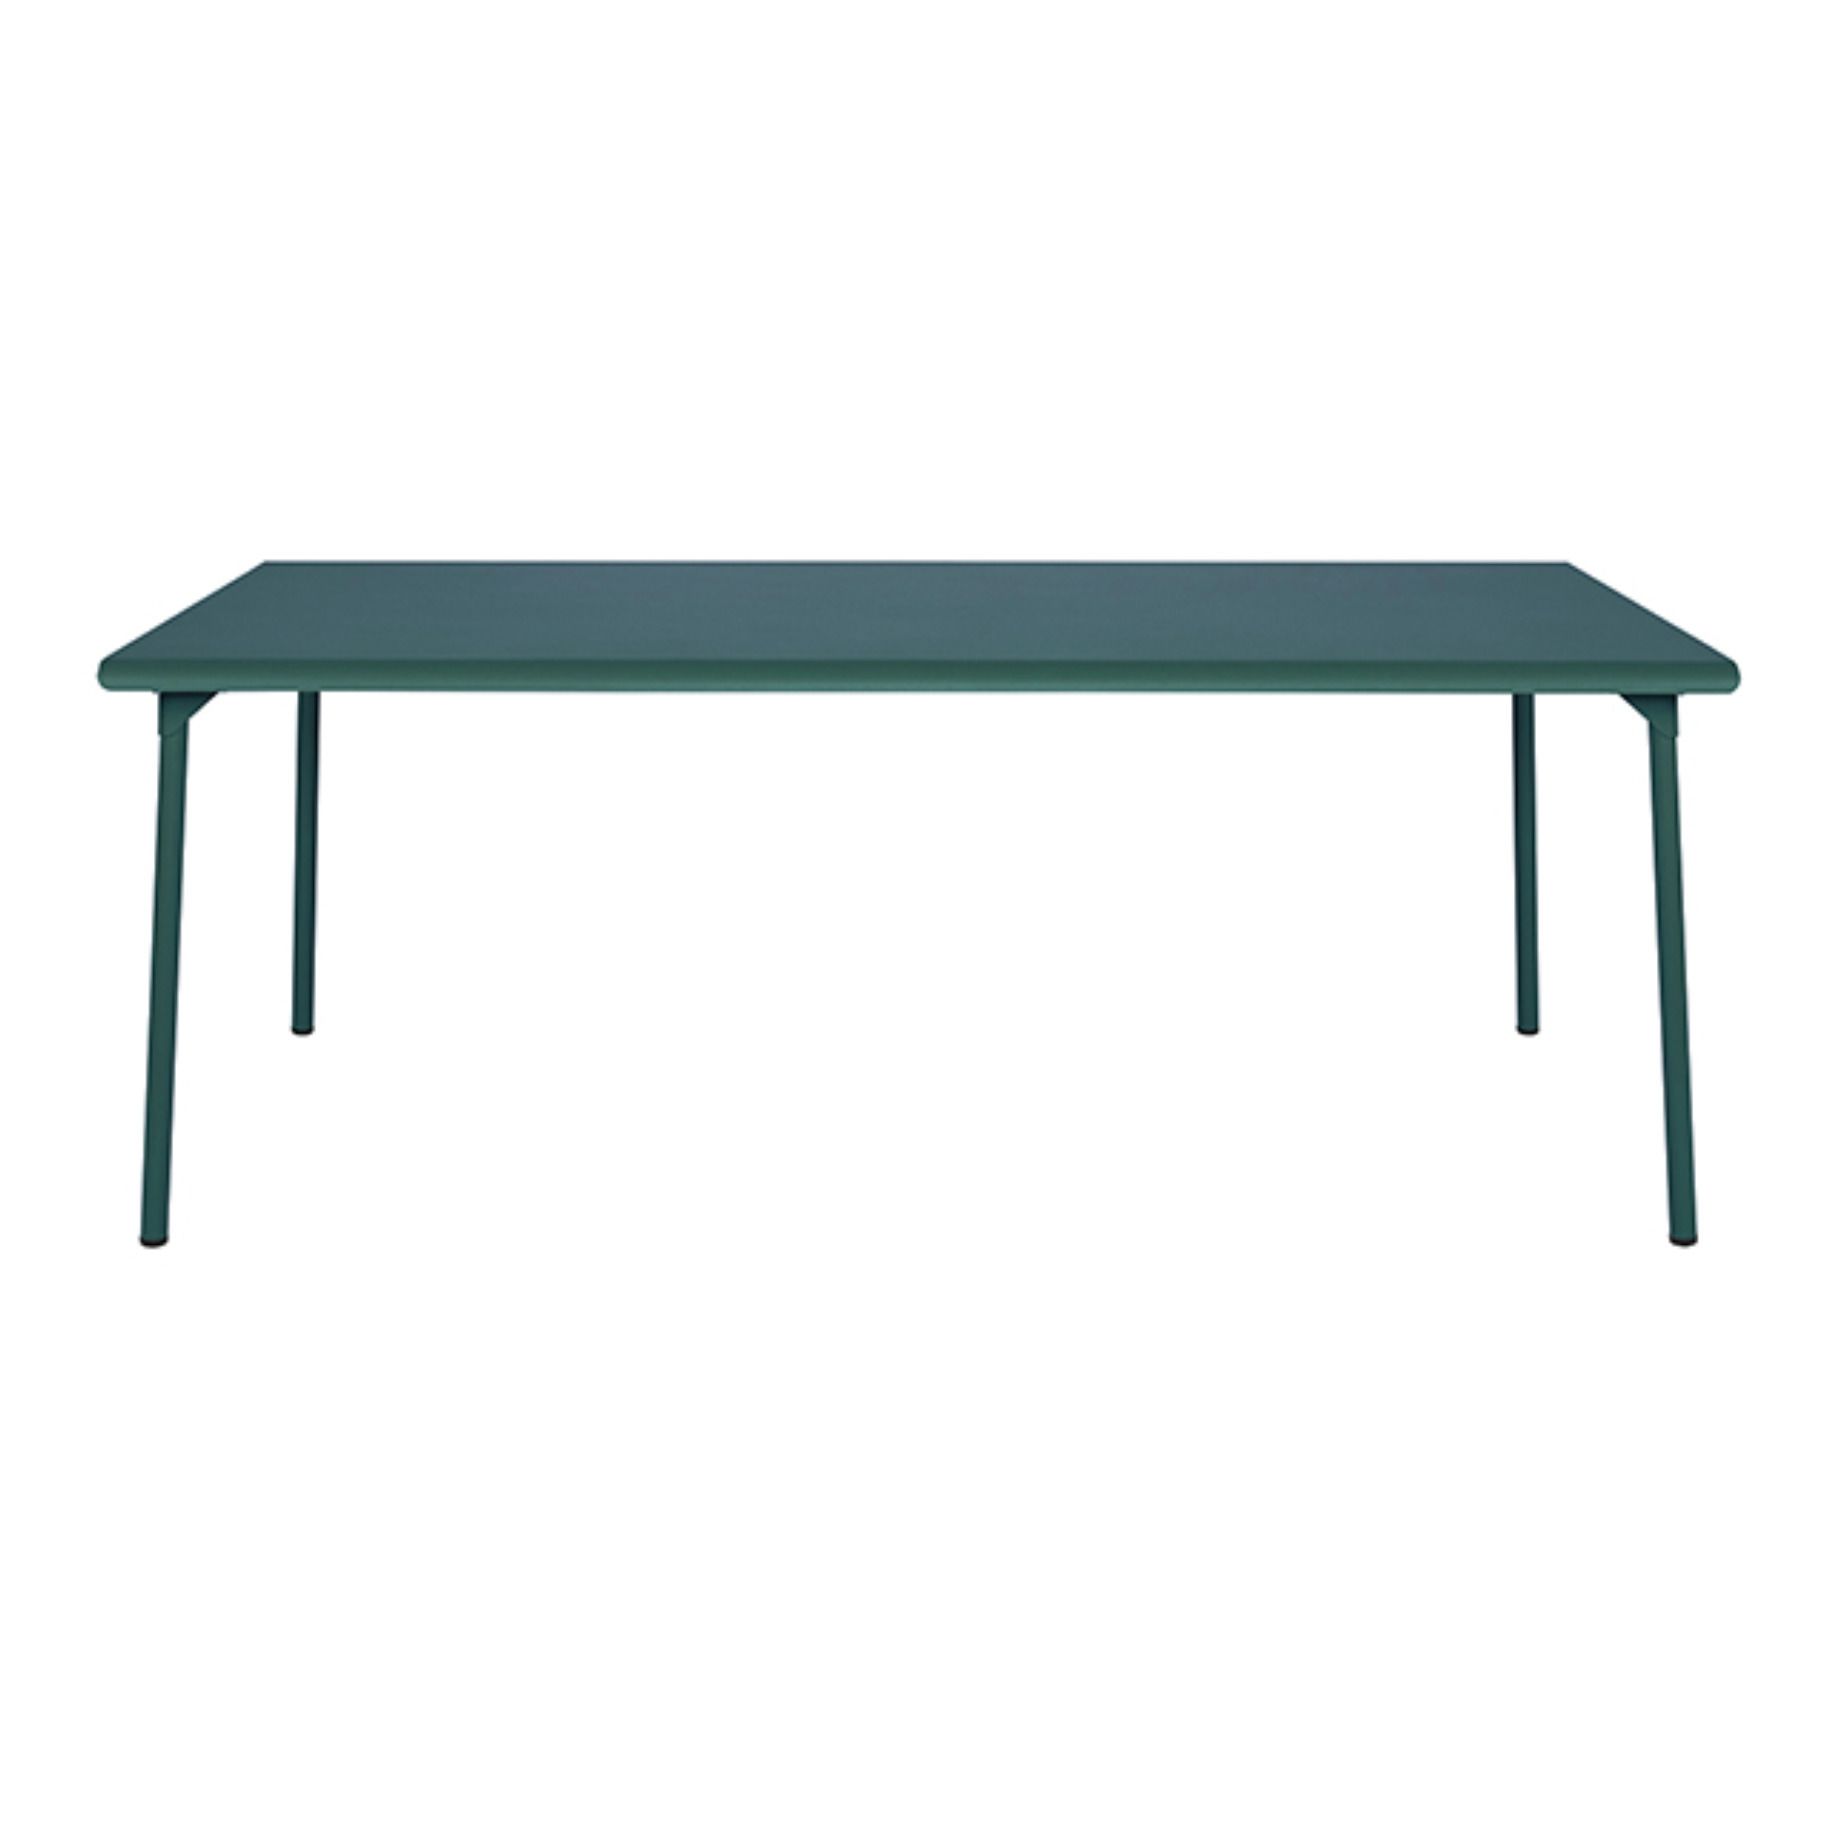 Tolix - Table outdoor Patio en inox - 240x100 cm - Vert Empire